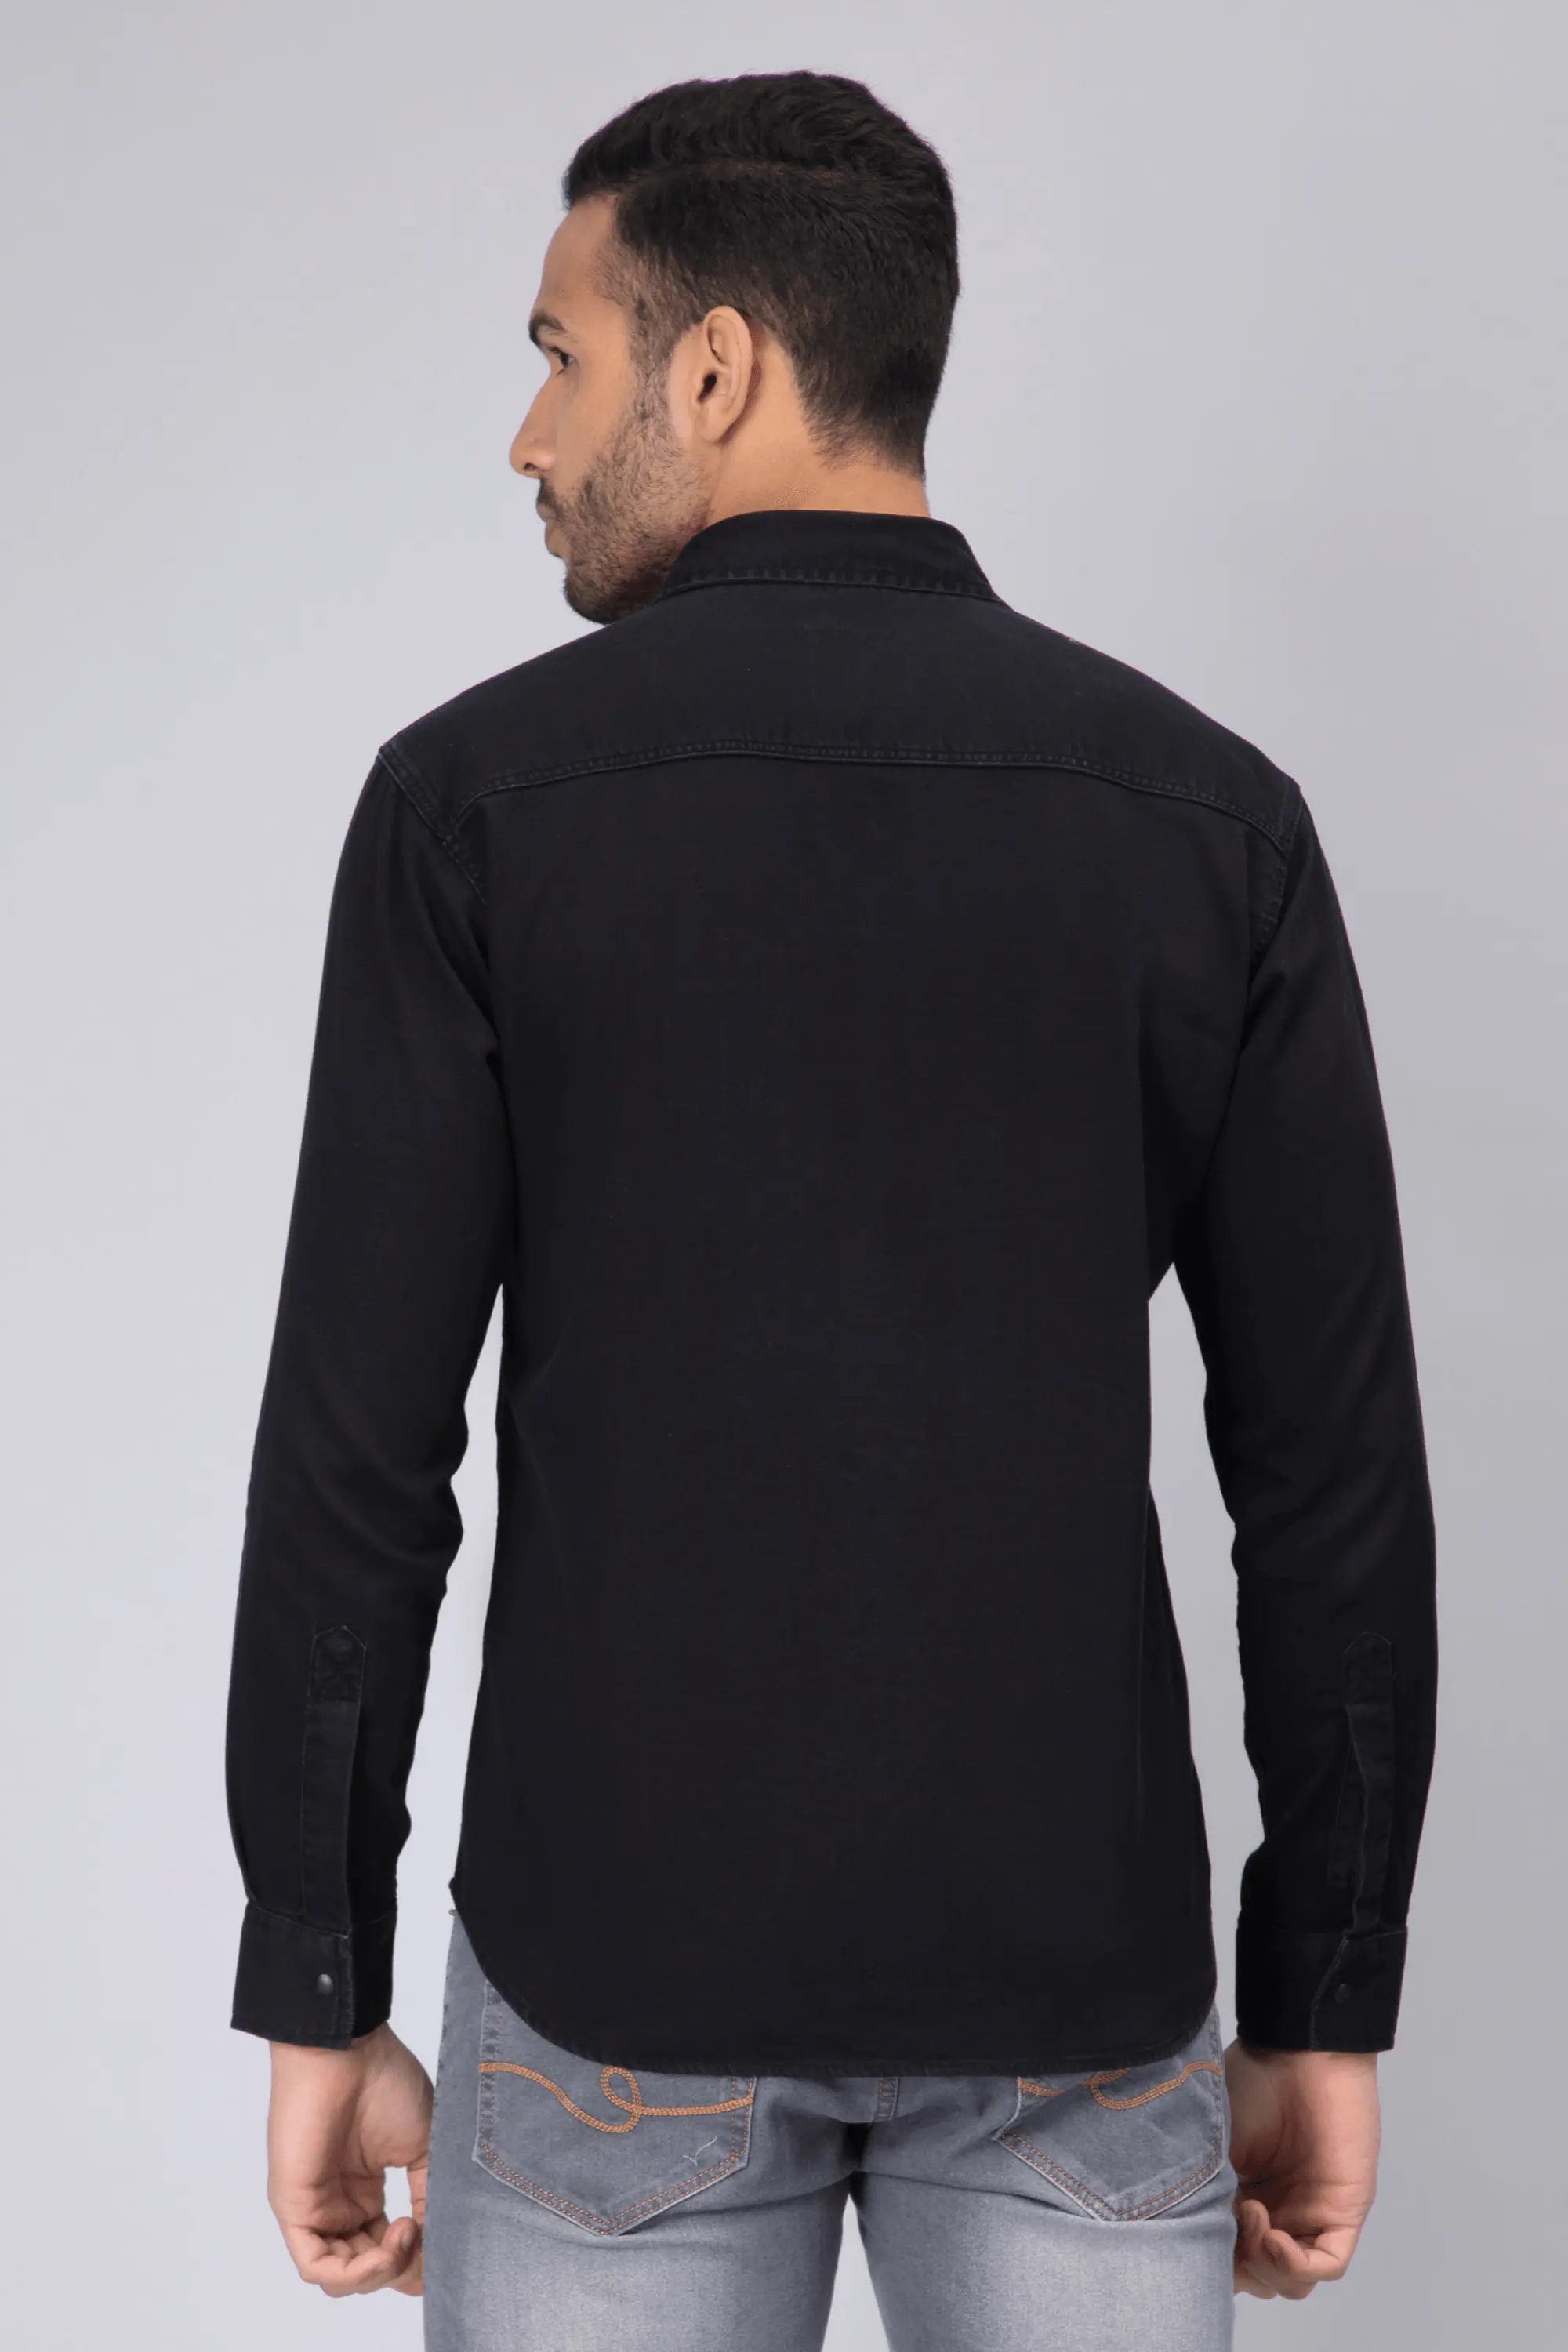 Black Denim Shirts - Buy Black Denim Shirts online in India